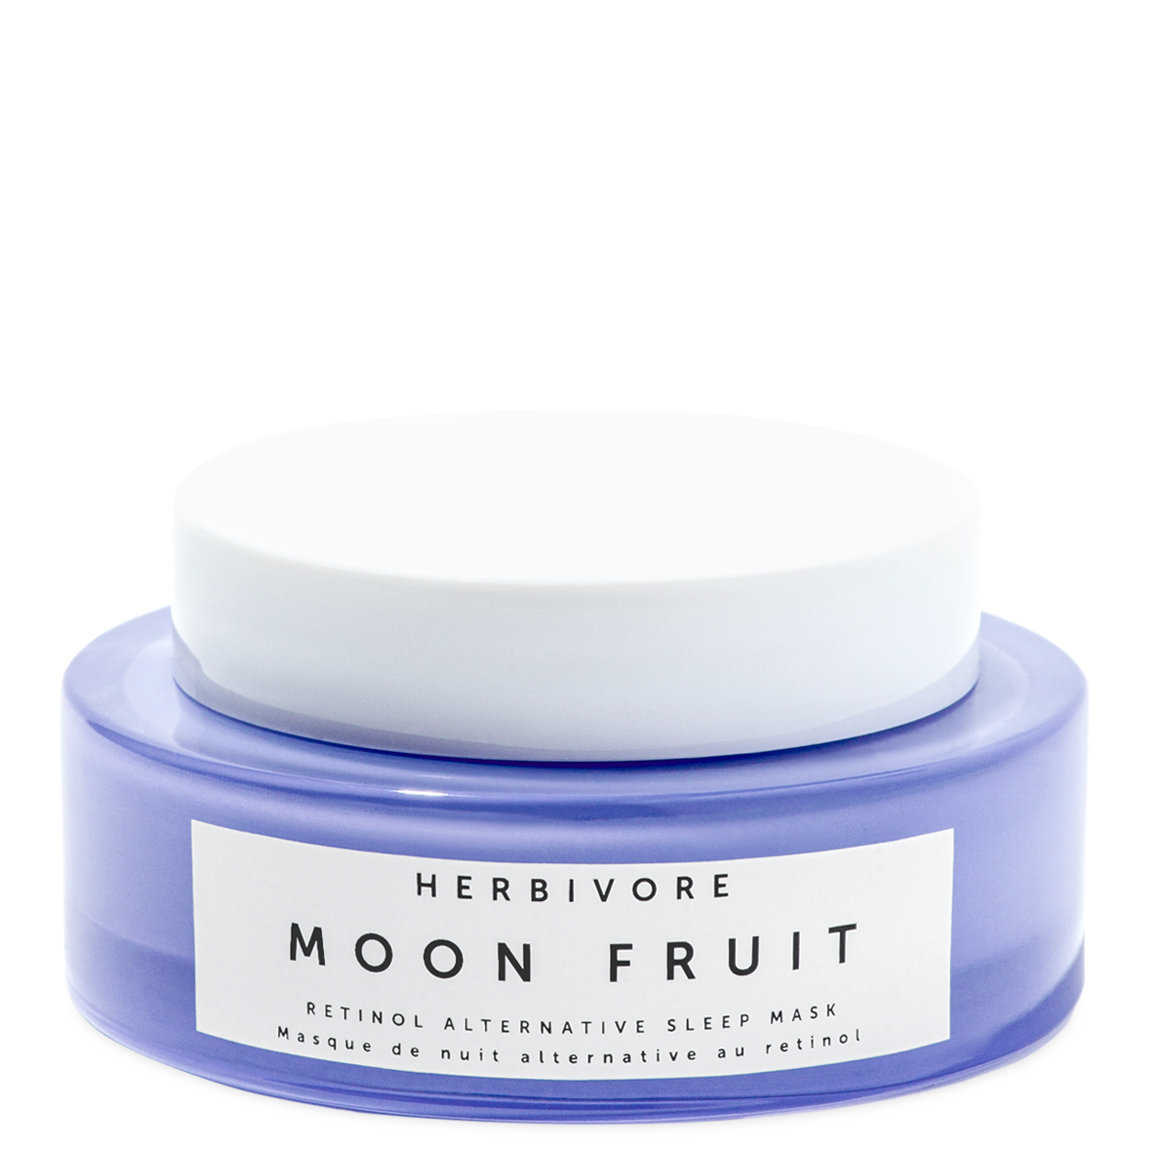 Herbivore Moon Fruit Retinol Alternative Sleep Mask alternative view 1 - product swatch.